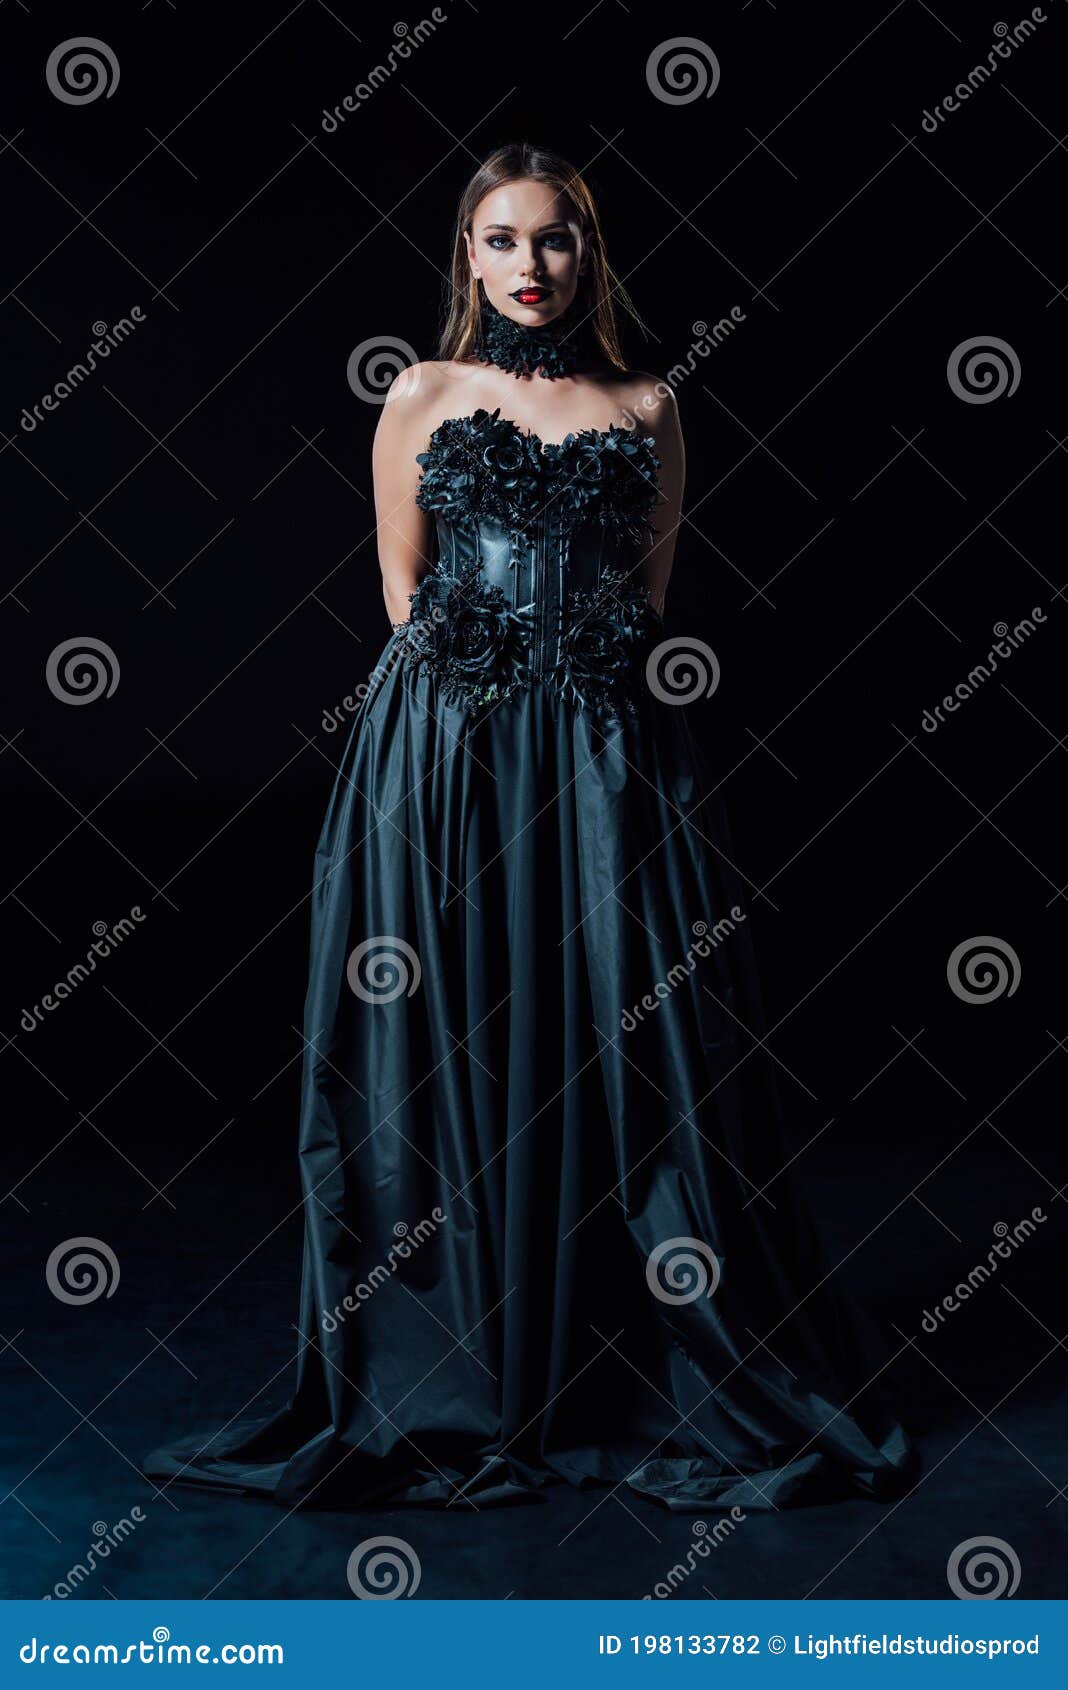 Scary Vampire Girl in Black Gothic Dress Stock Photo - Image of stylish ...